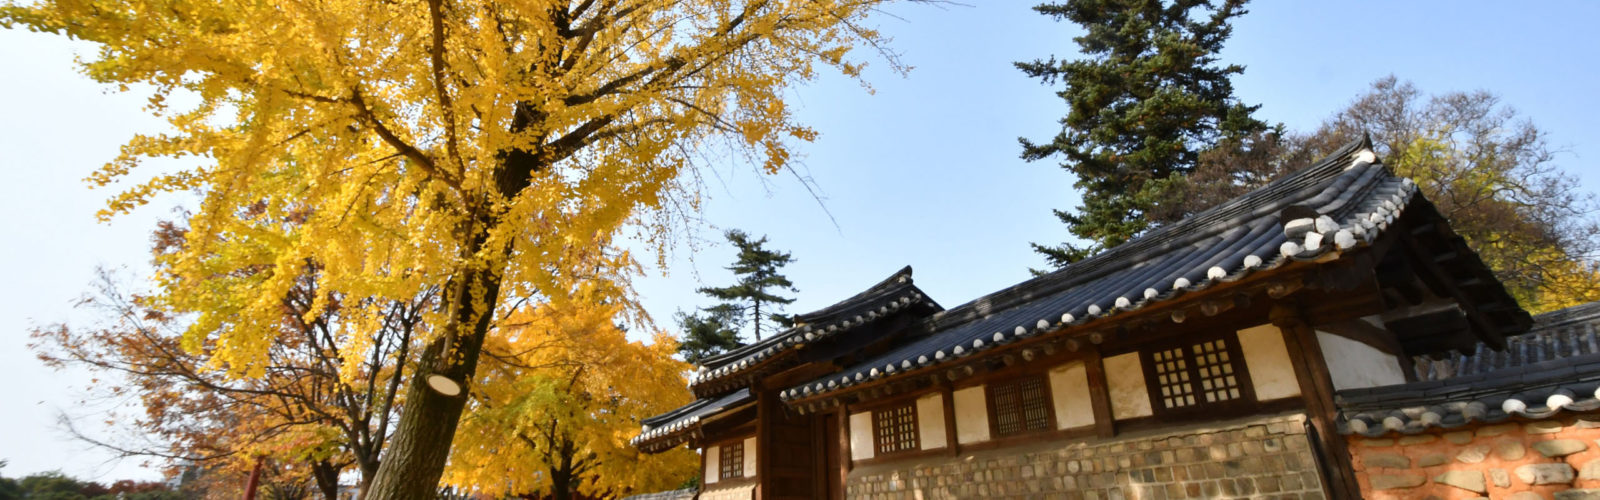 jeonju-hall-autumn-south-korea